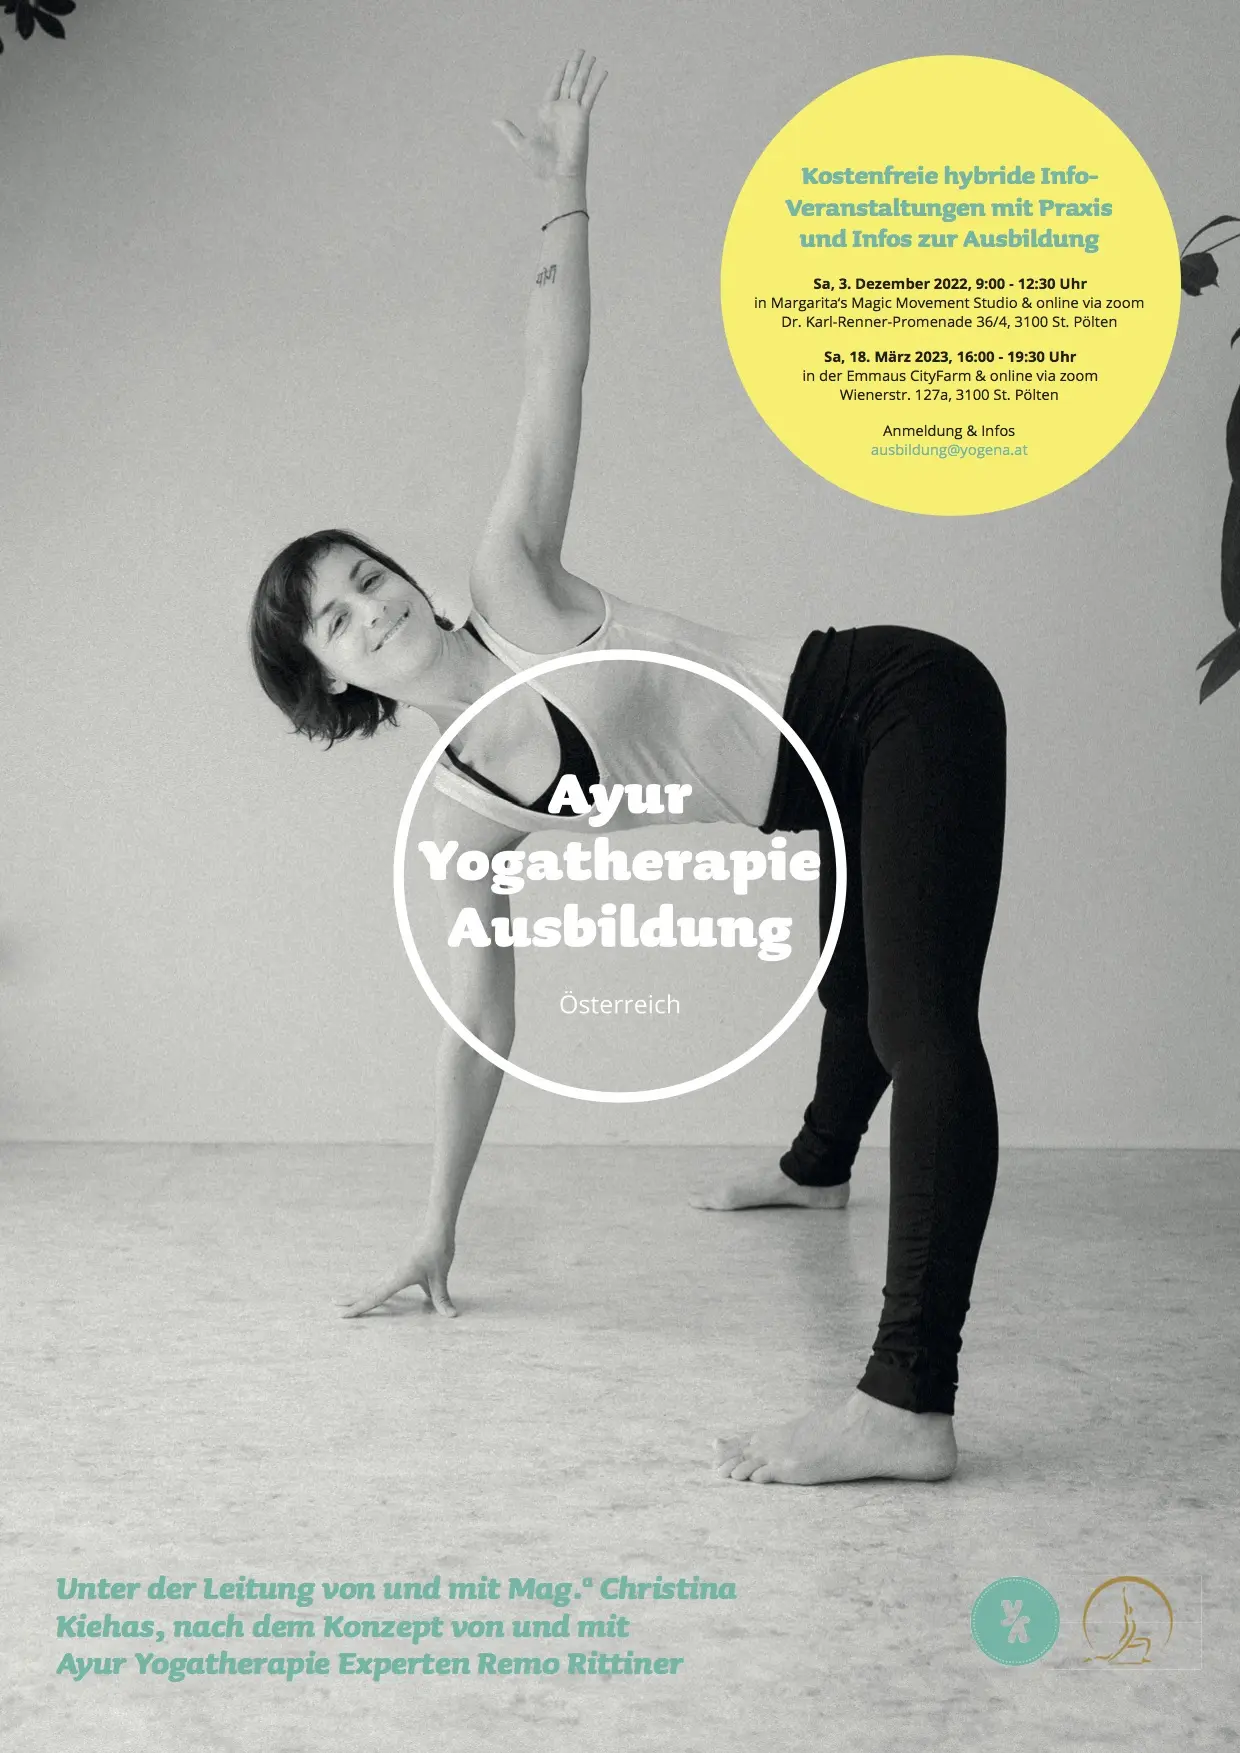 yoga therapie ausbildung - Wie wird man Yogatherapeut